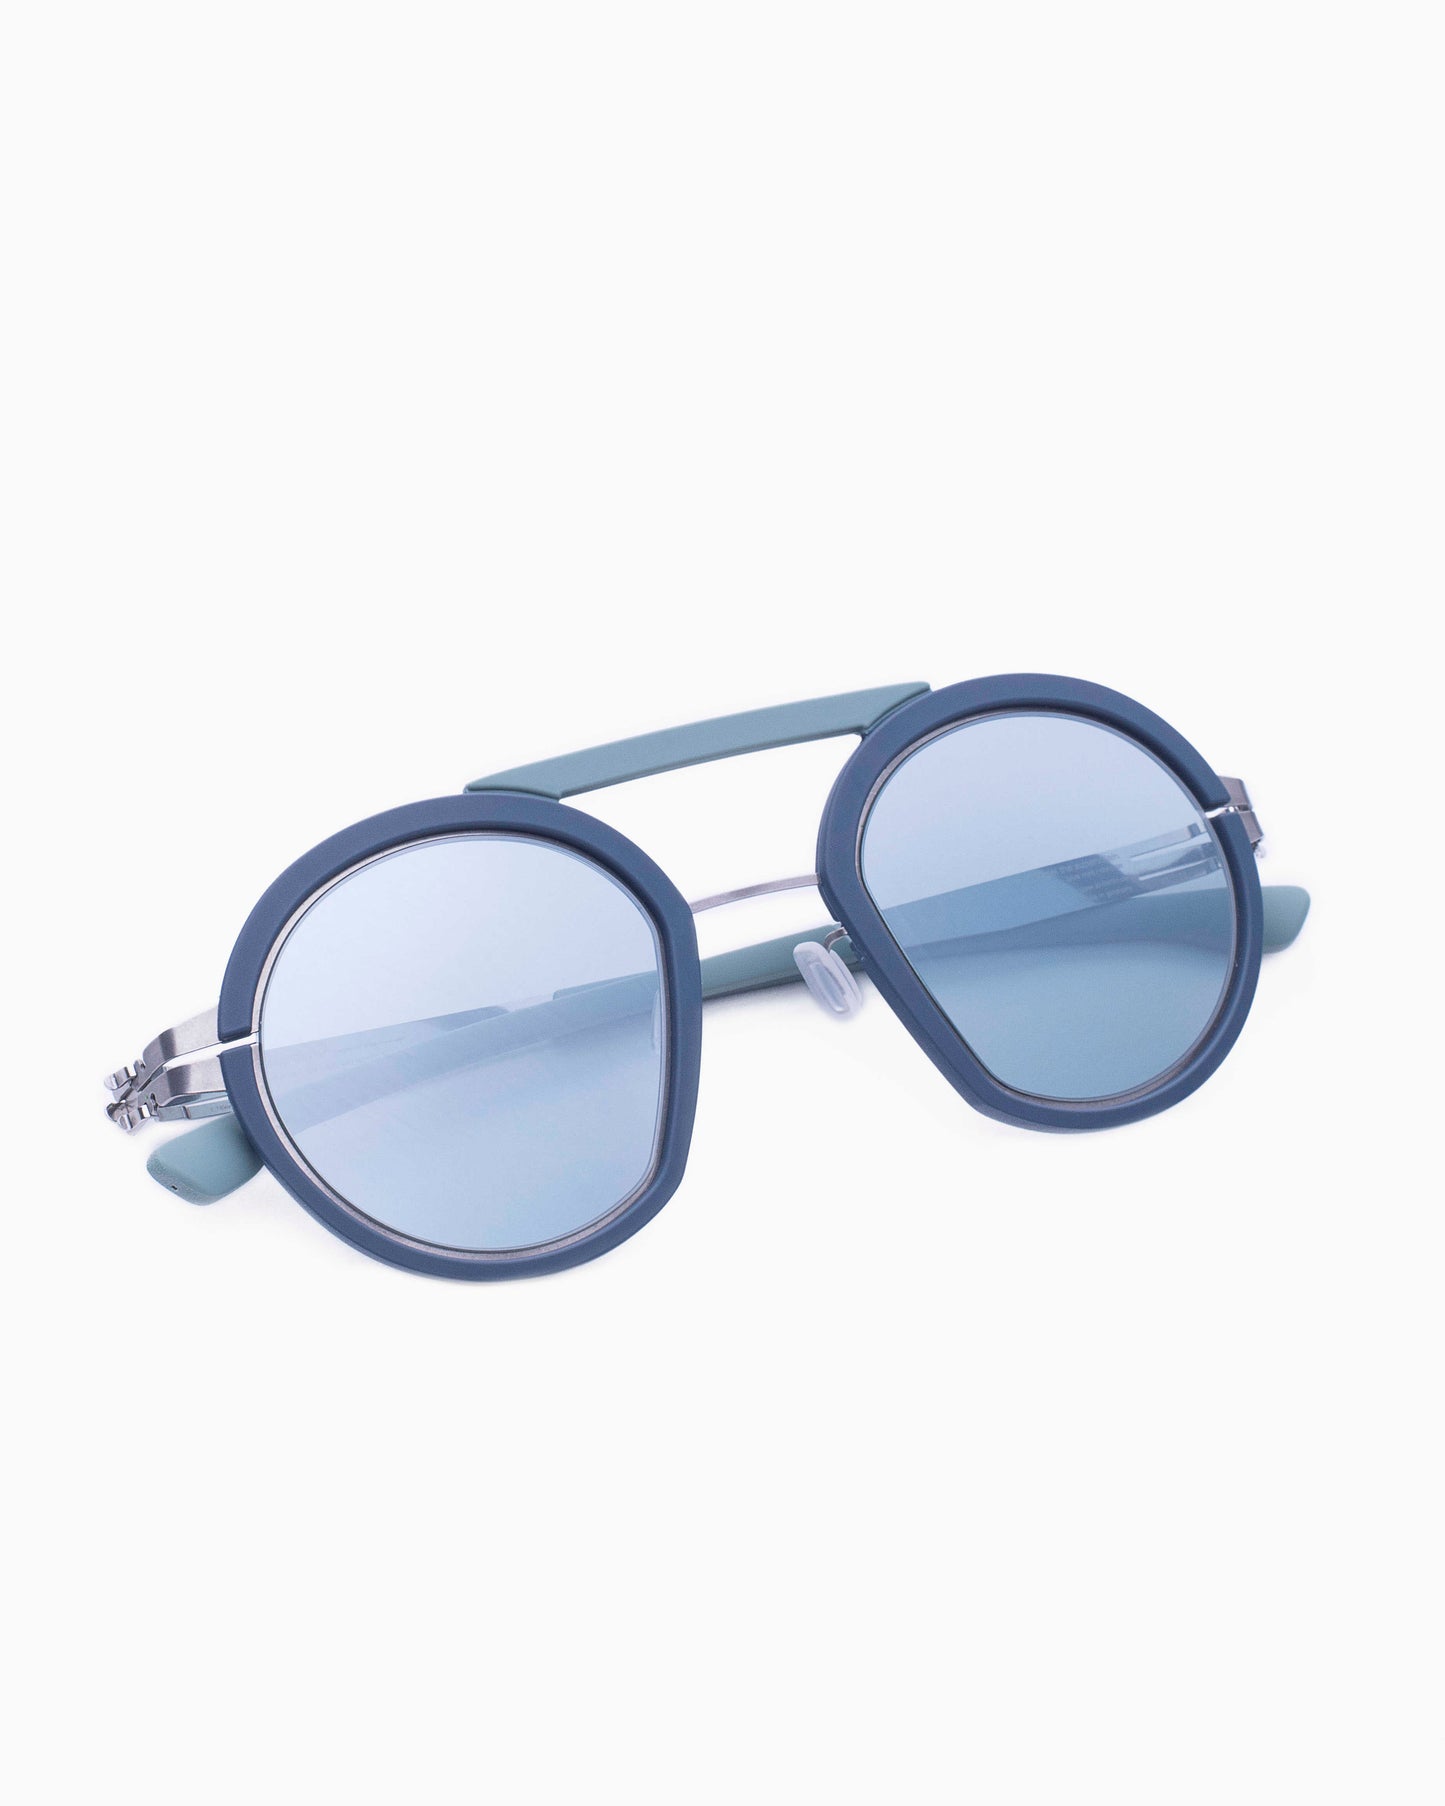 Ic Berlin - thesupervillain - chrome-blue-mint | glasses bar